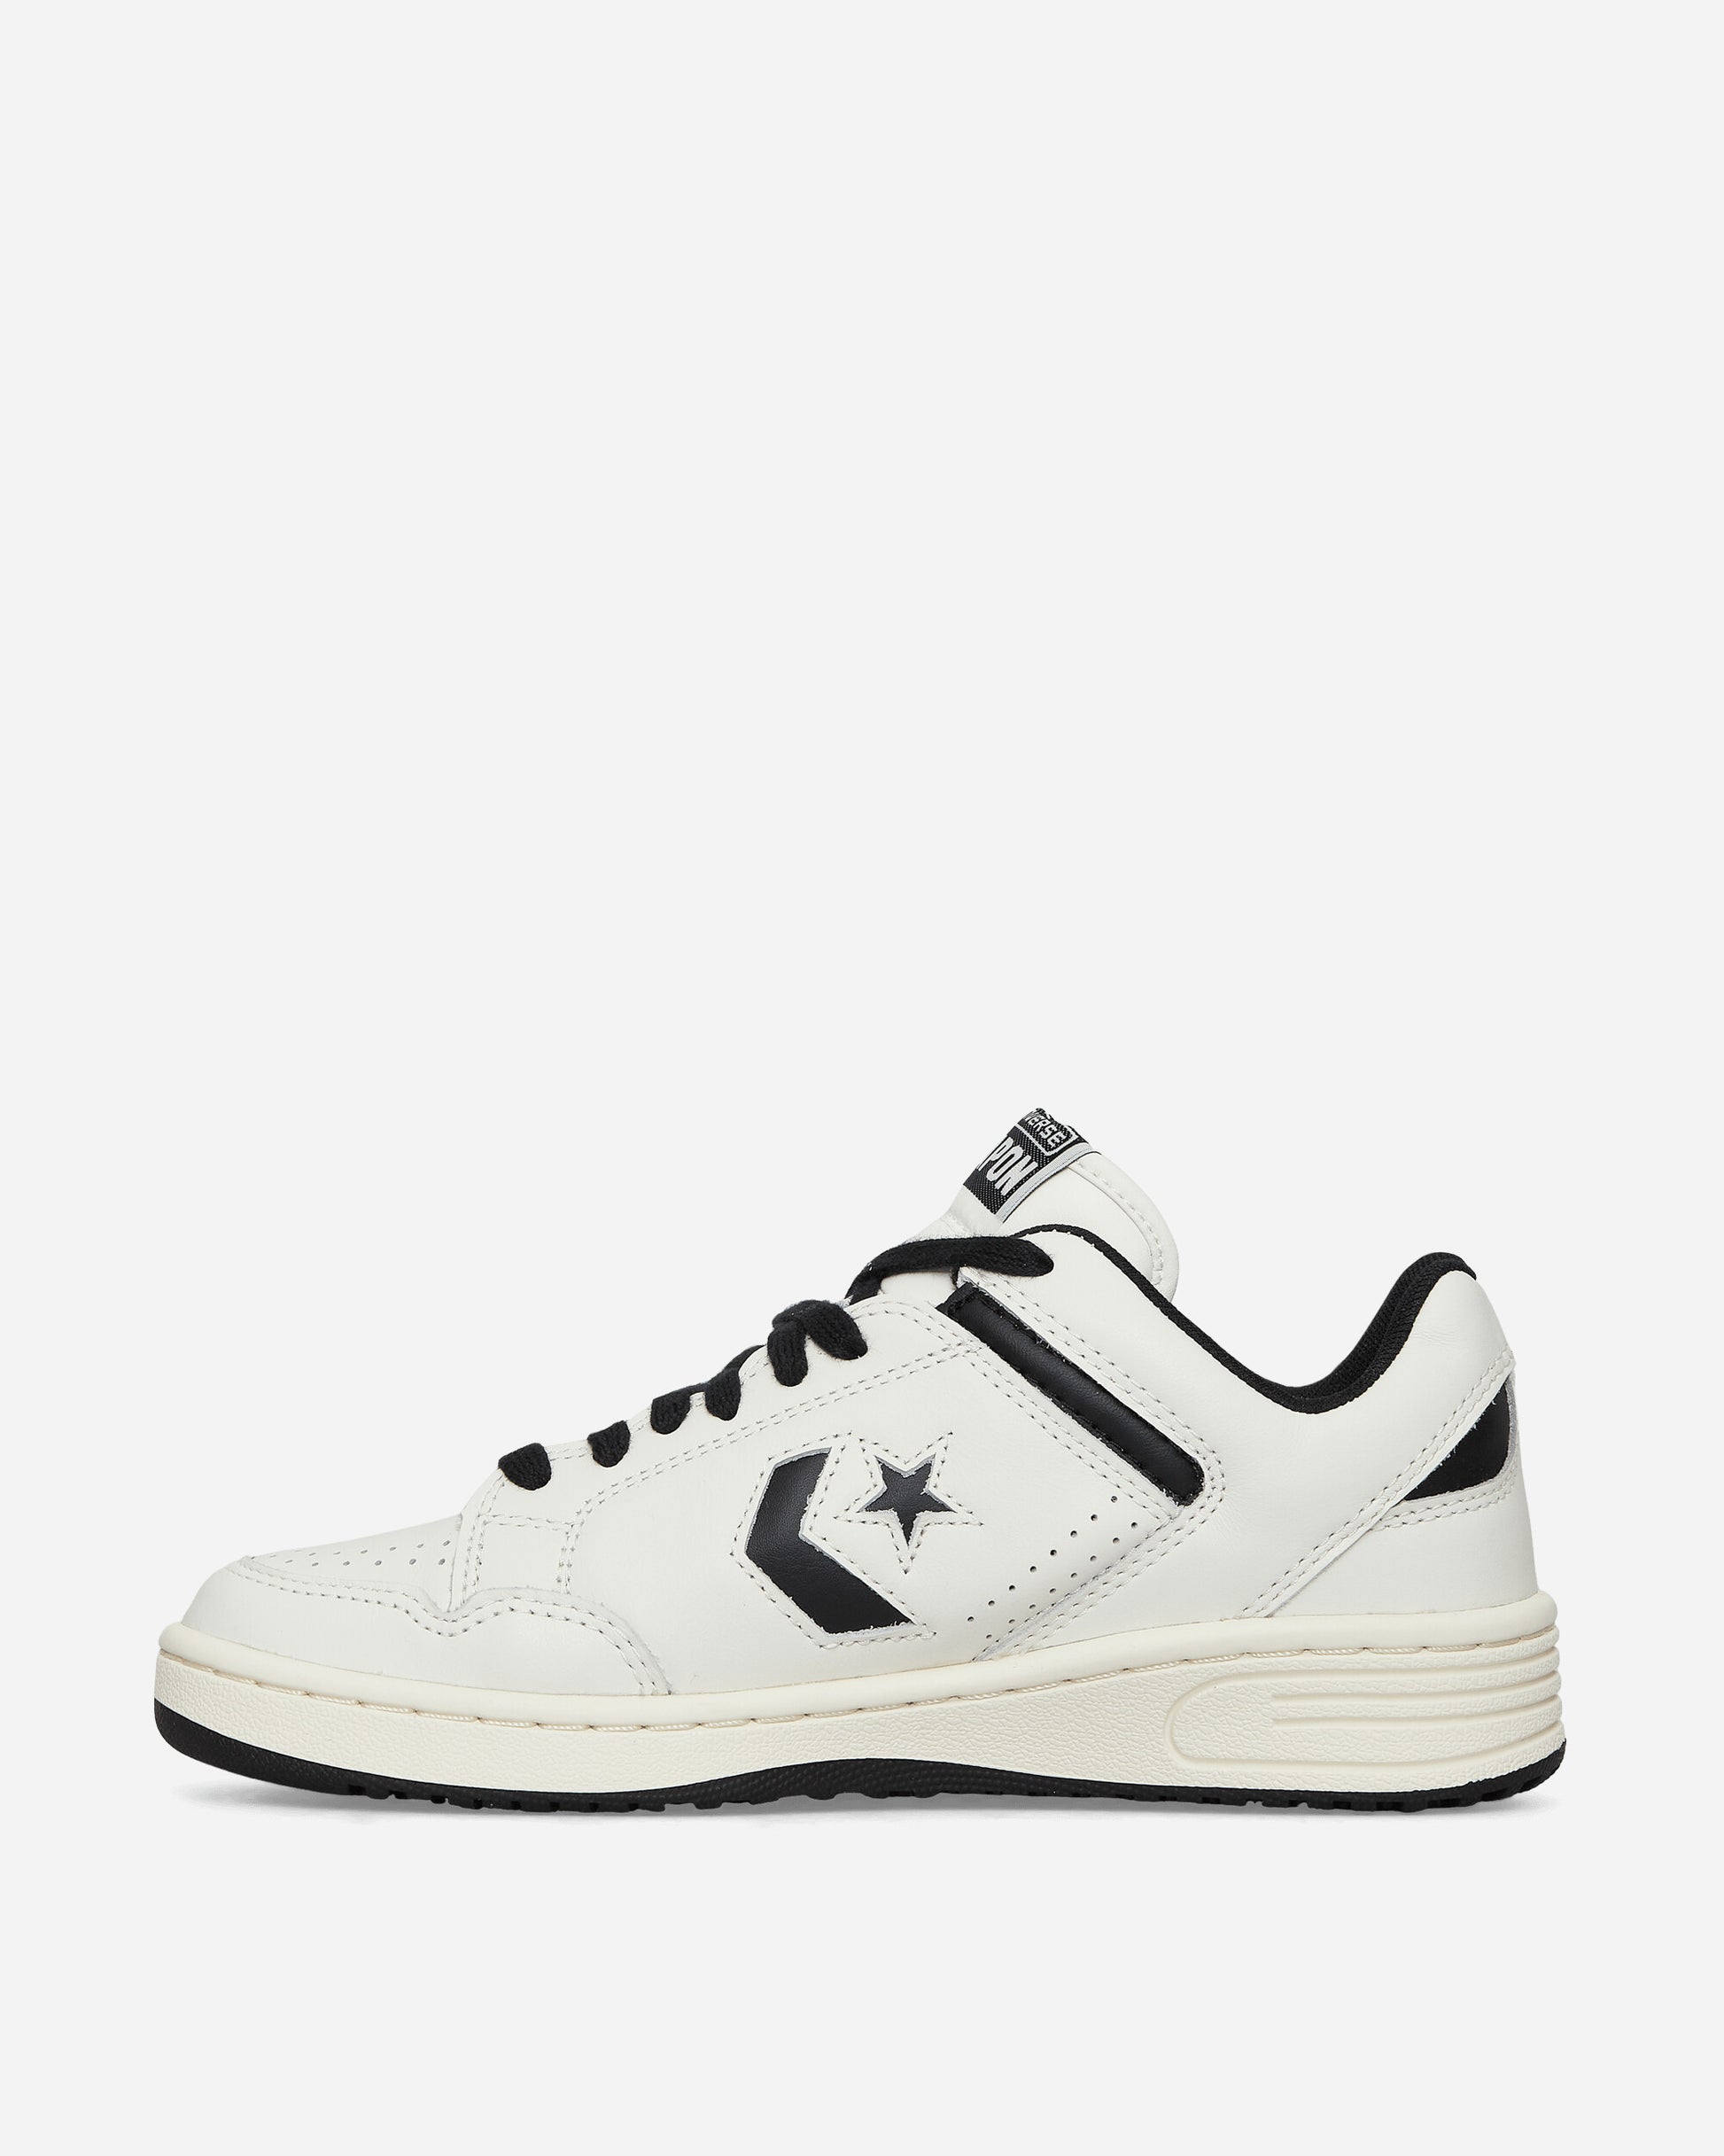 Converse Weapon Vintage White/Black Sneakers Low A07239C